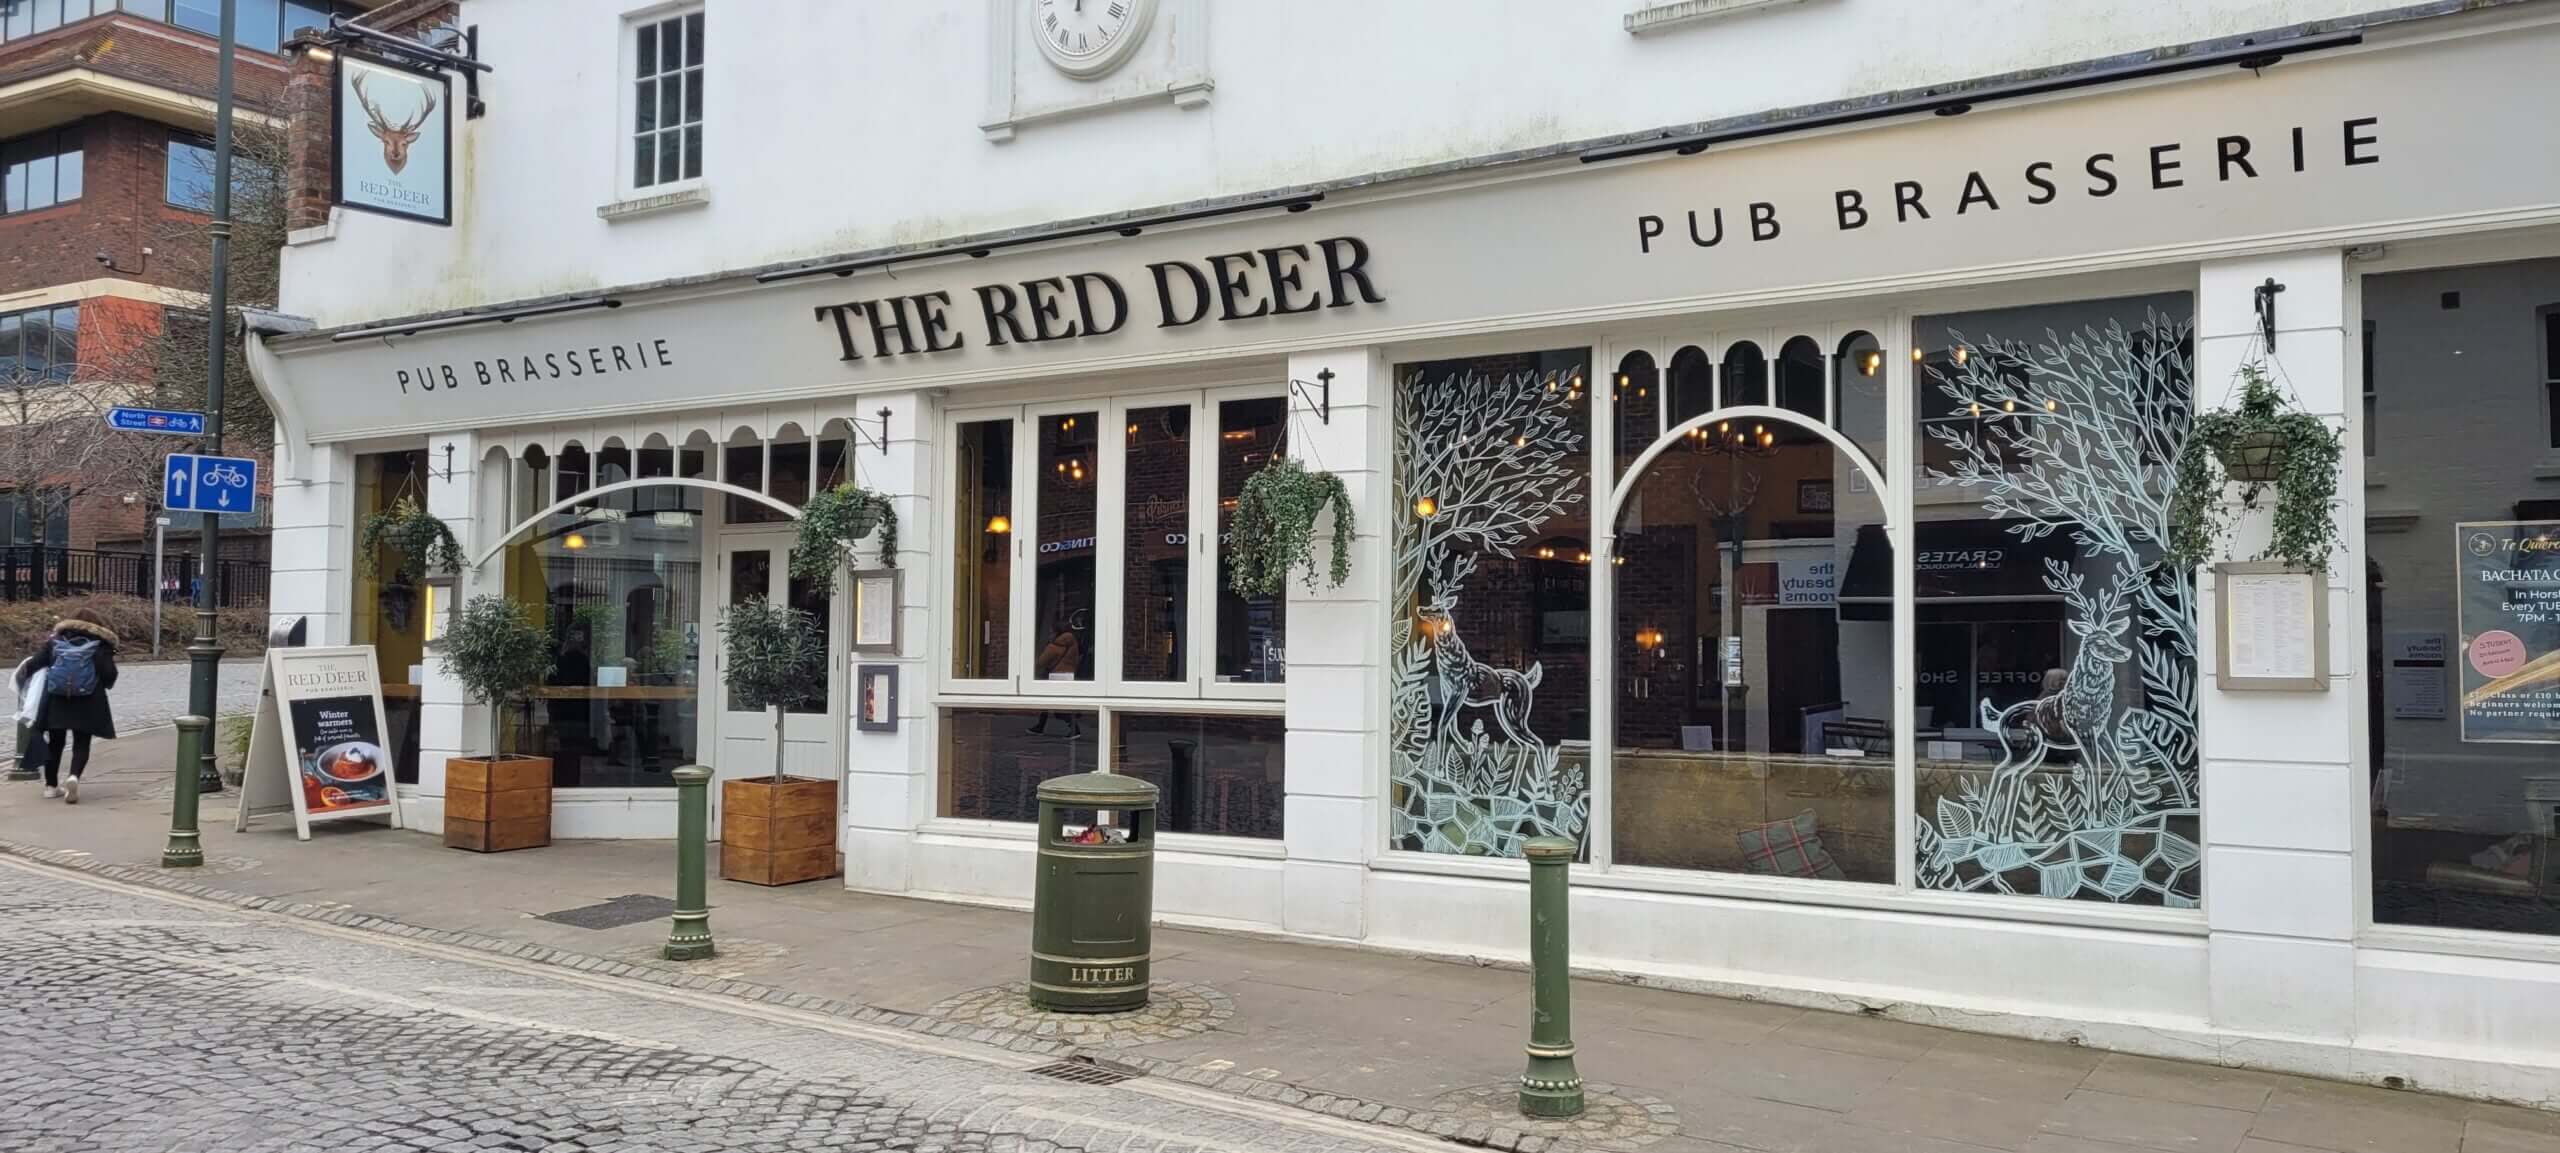 The Red Deer